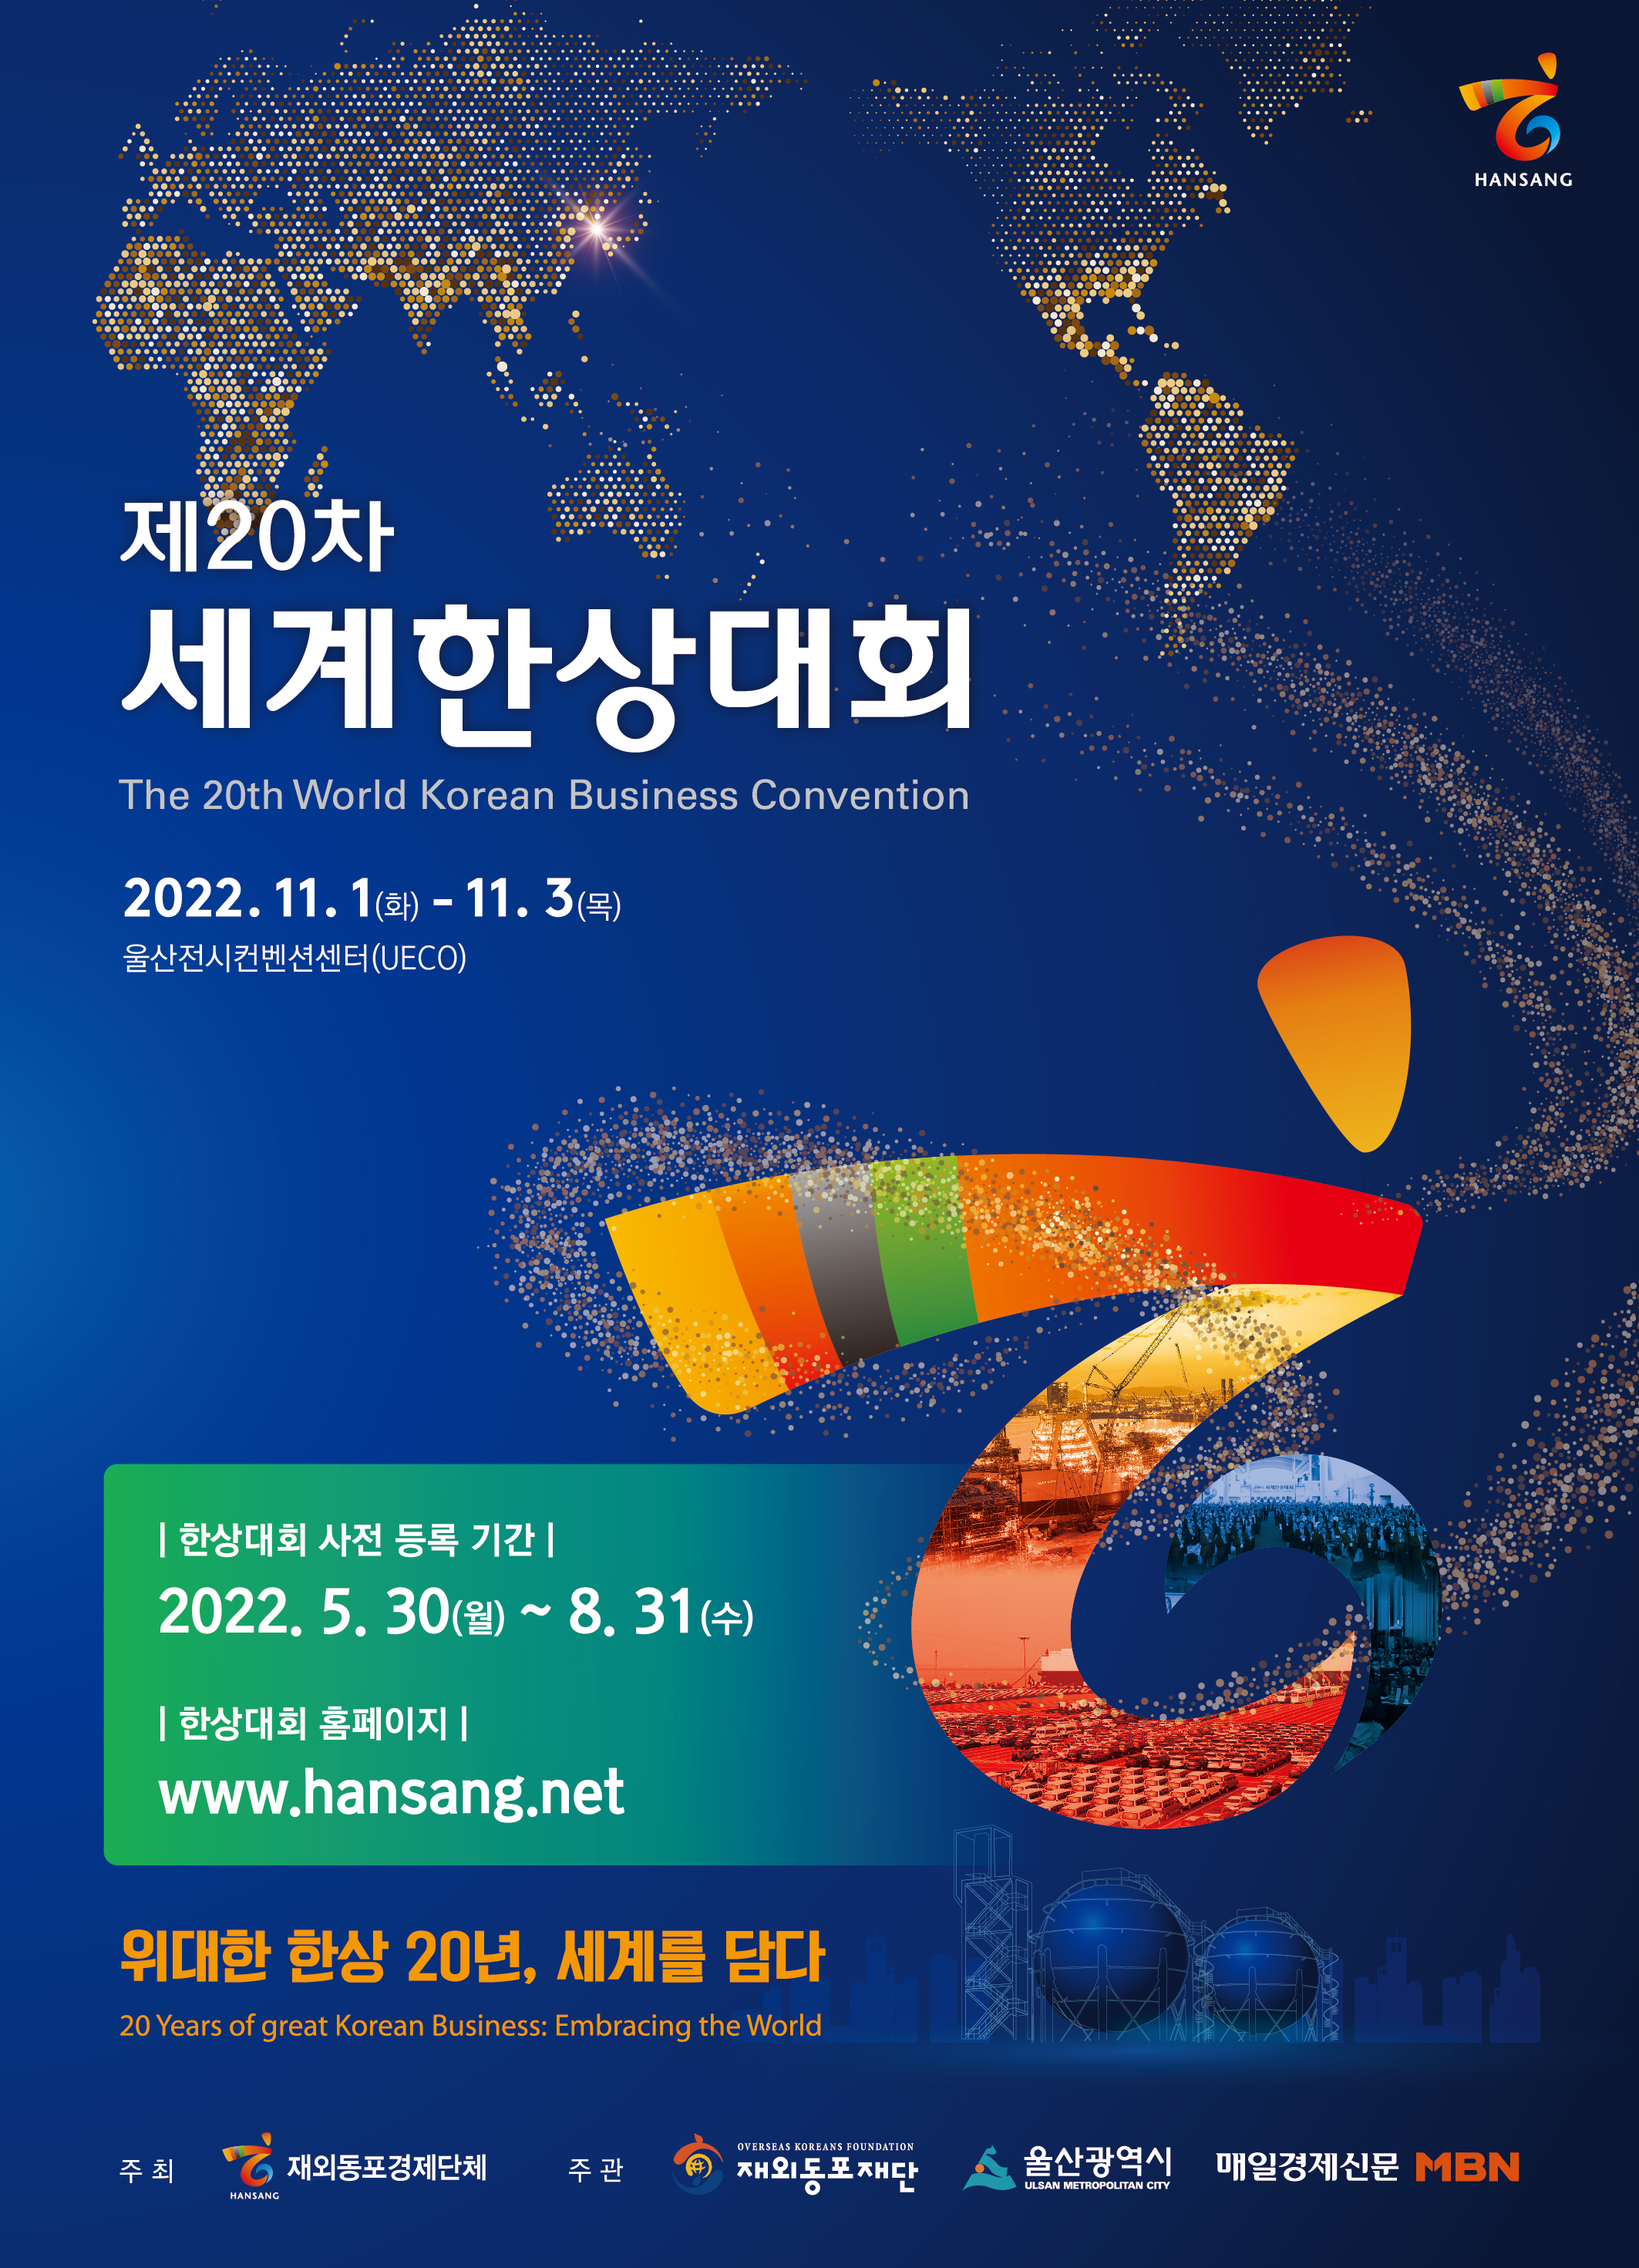 HANSANG 제20차 세계한상대회 The 20th World Korean Business Convention 2022. 11. 1(화) - 11. 3(목) 울산전시컨벤션센터(UECO) | 한상대회 사전 등록 기간 | 2022. 5. 30(월) ~ 8. 31 (수) | 한상대회 홈페이지] <a href=